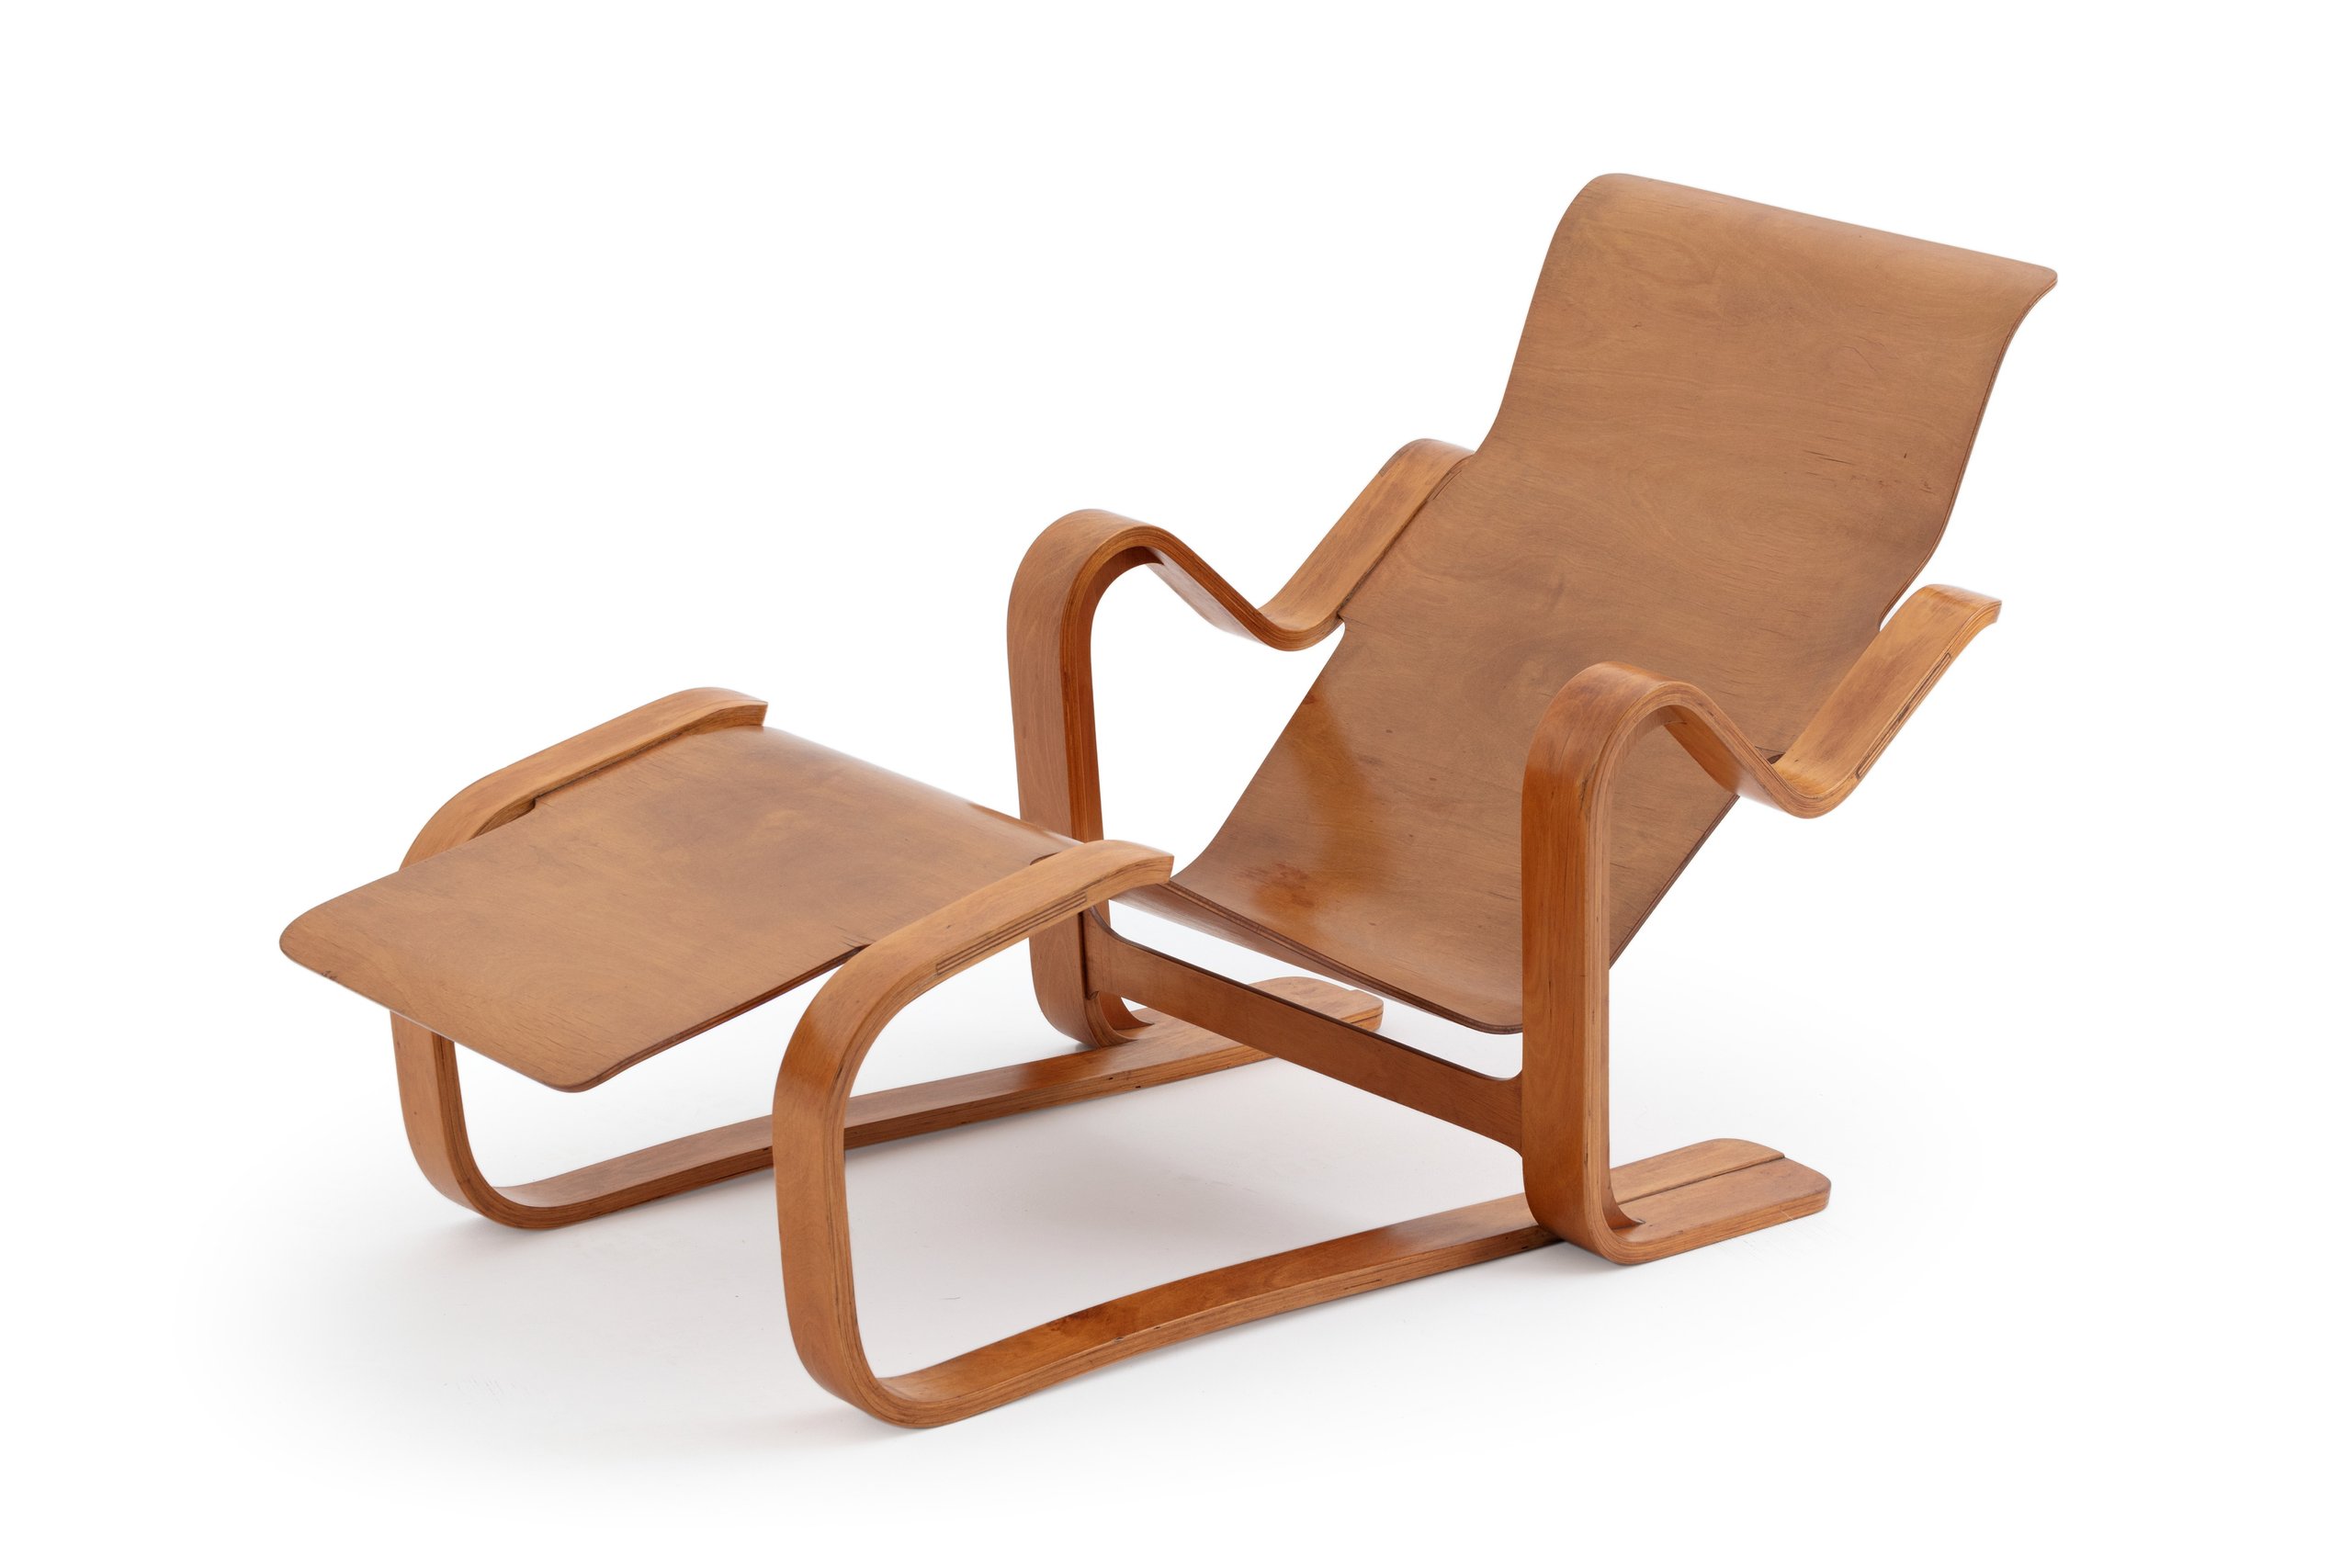 'Long Chair' by Marcel Breuer